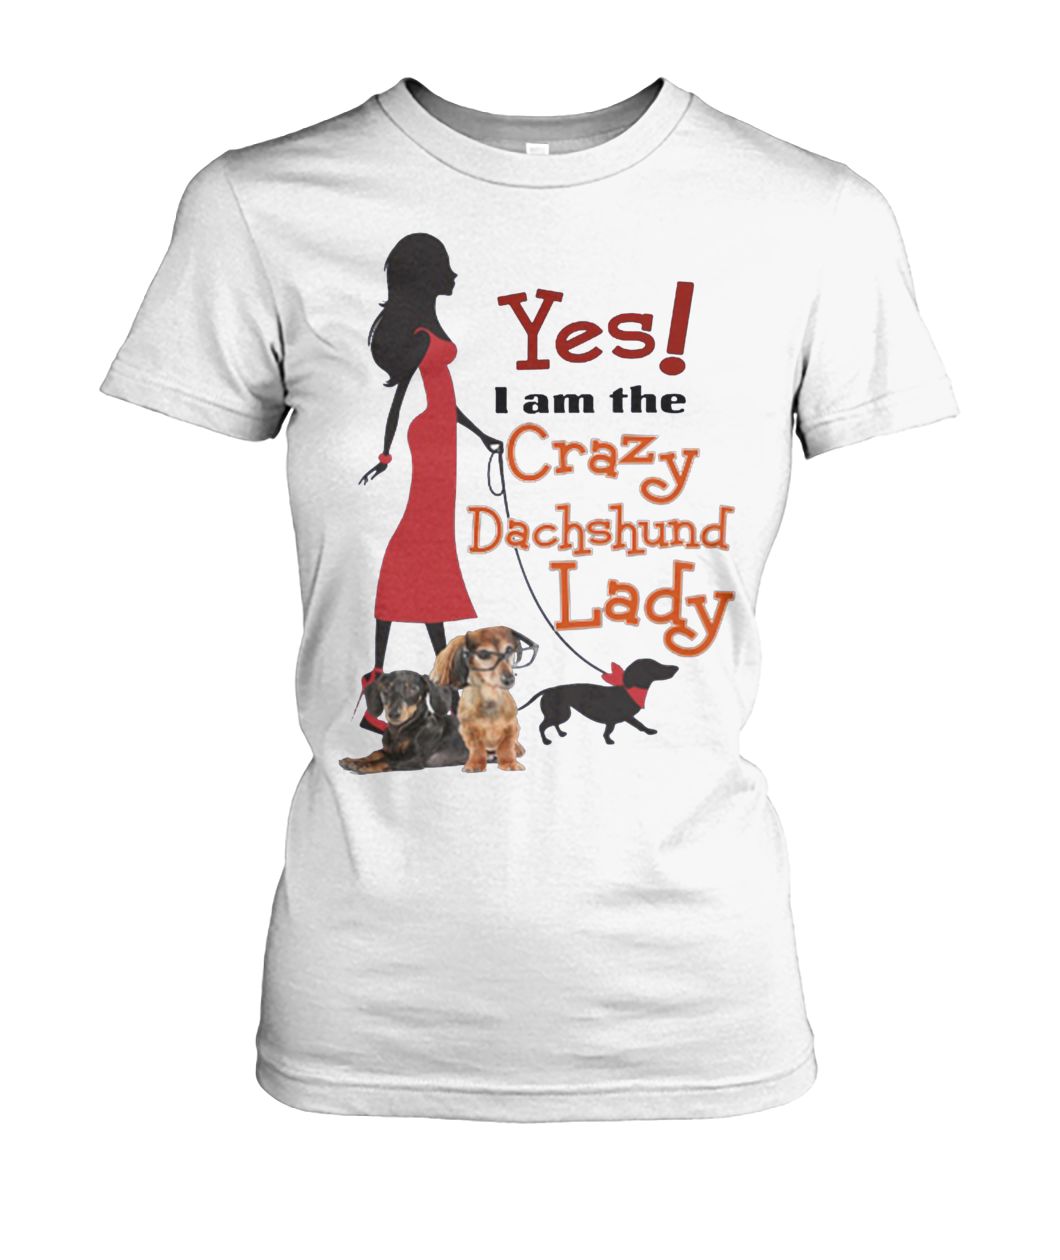 Yes I'm crazy dachshund lady women's crew tee